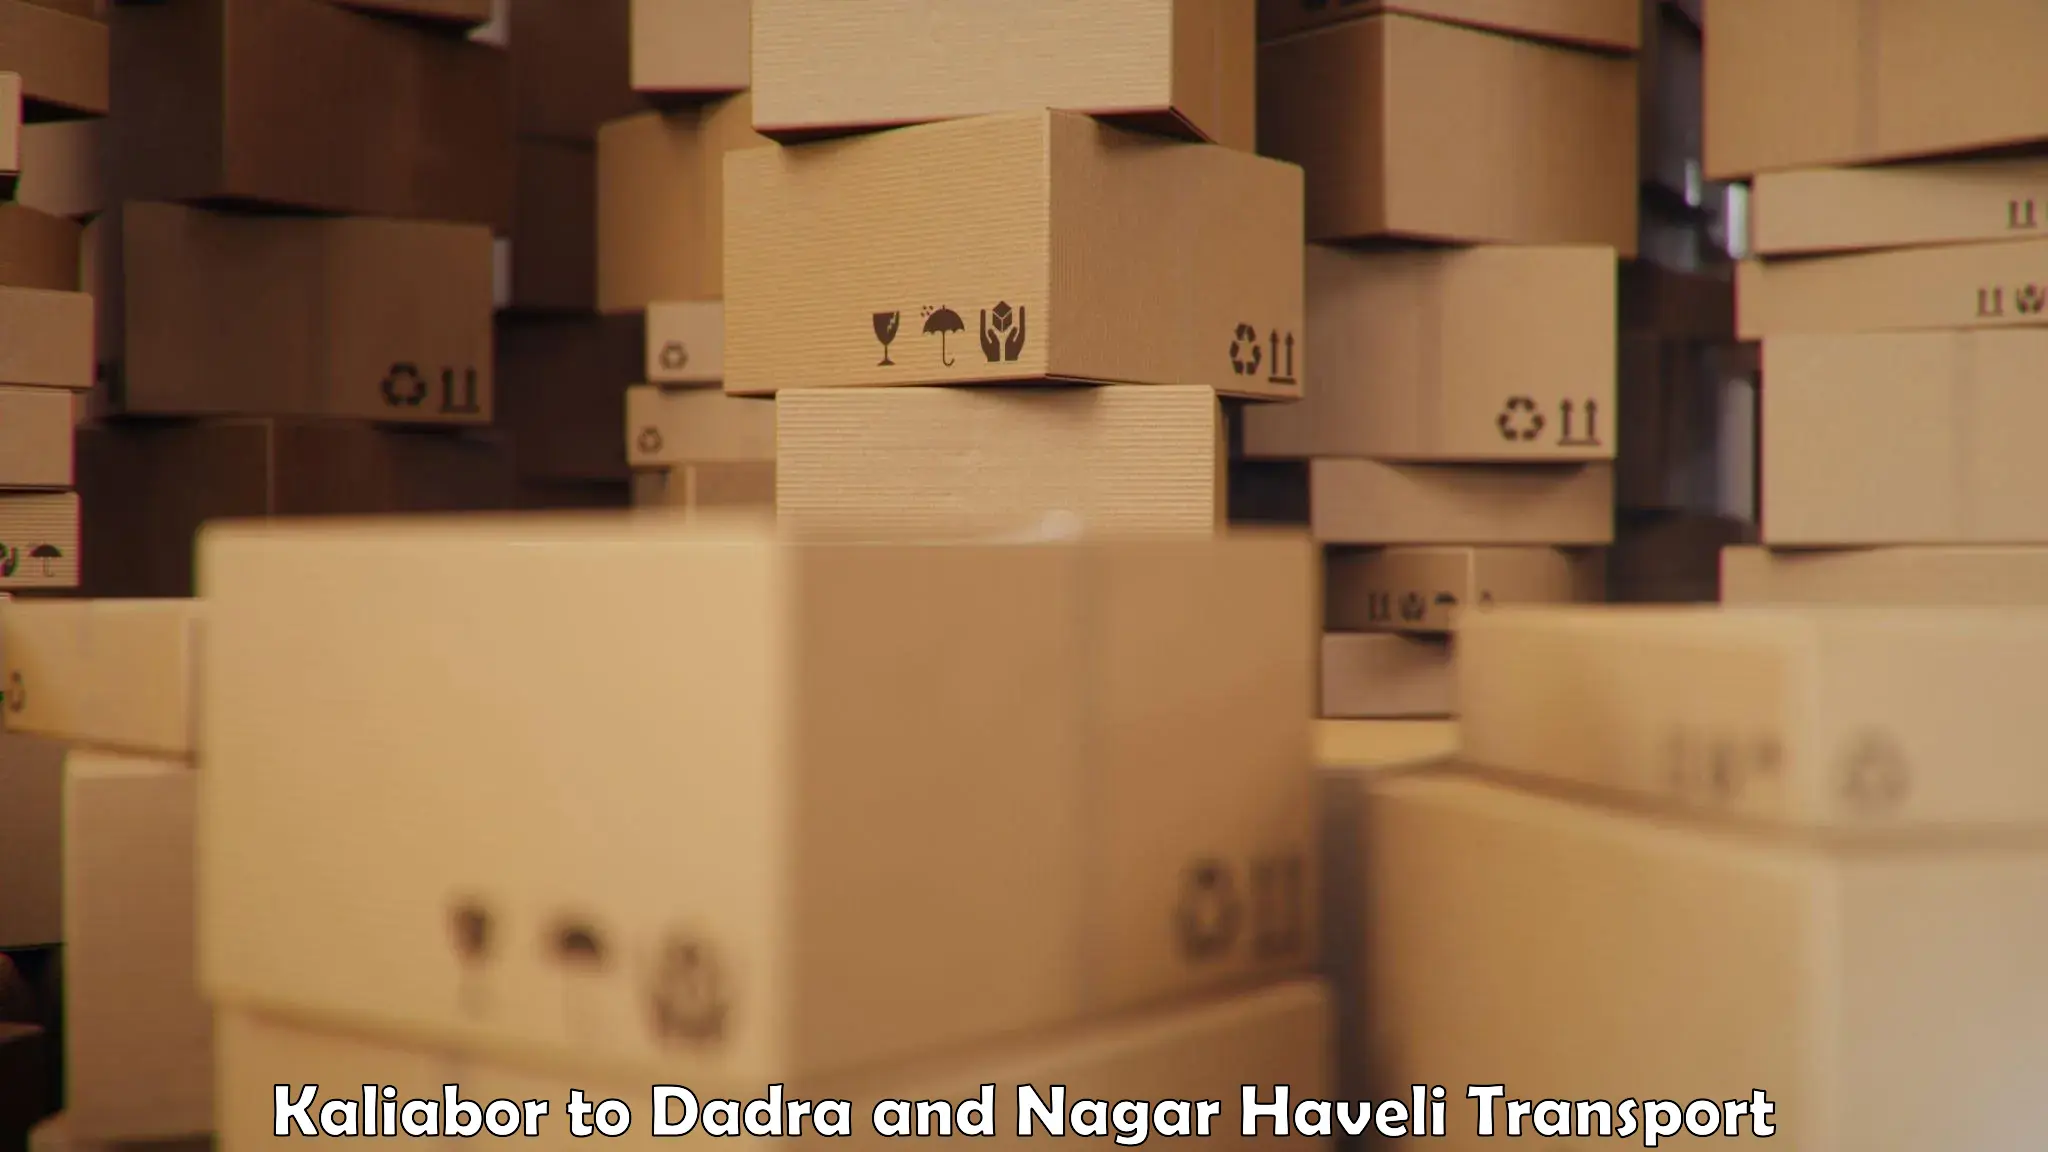 Shipping partner Kaliabor to Dadra and Nagar Haveli